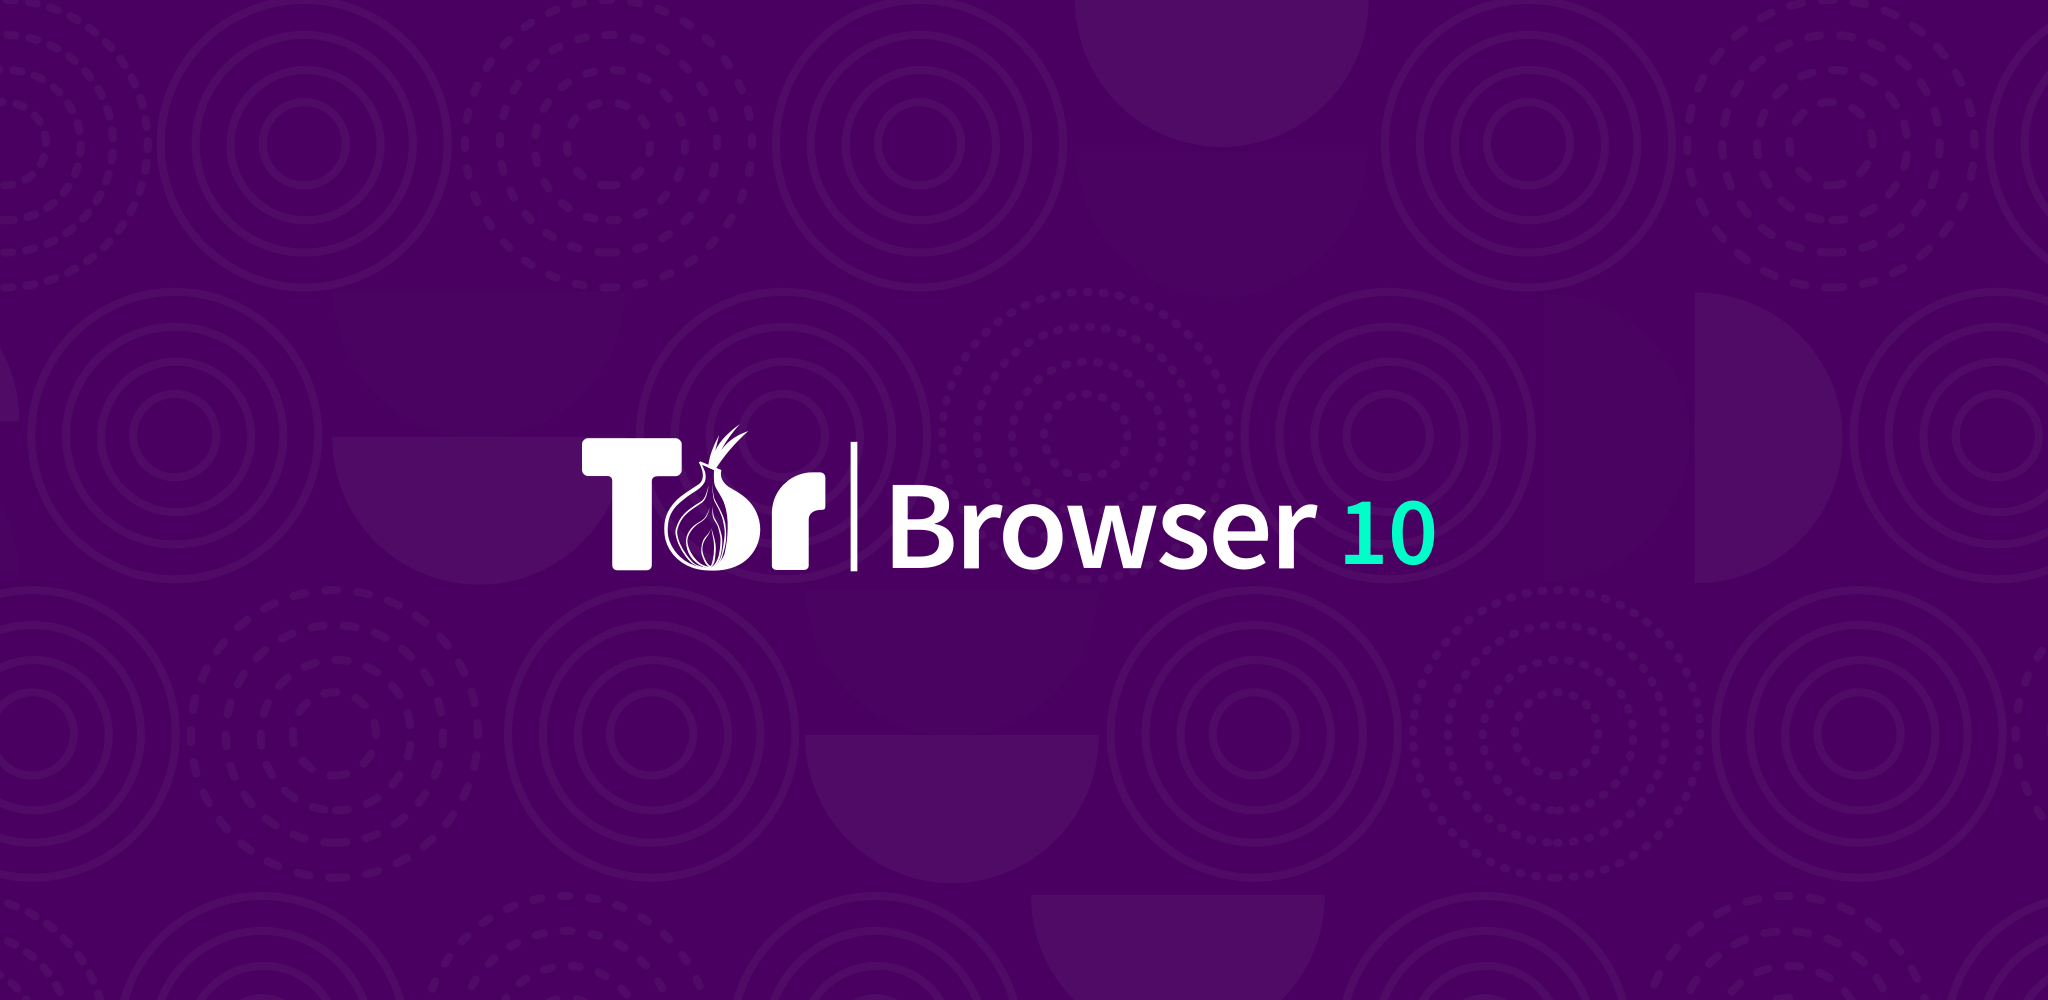 Tor browser freebsd питер семена марихуаны